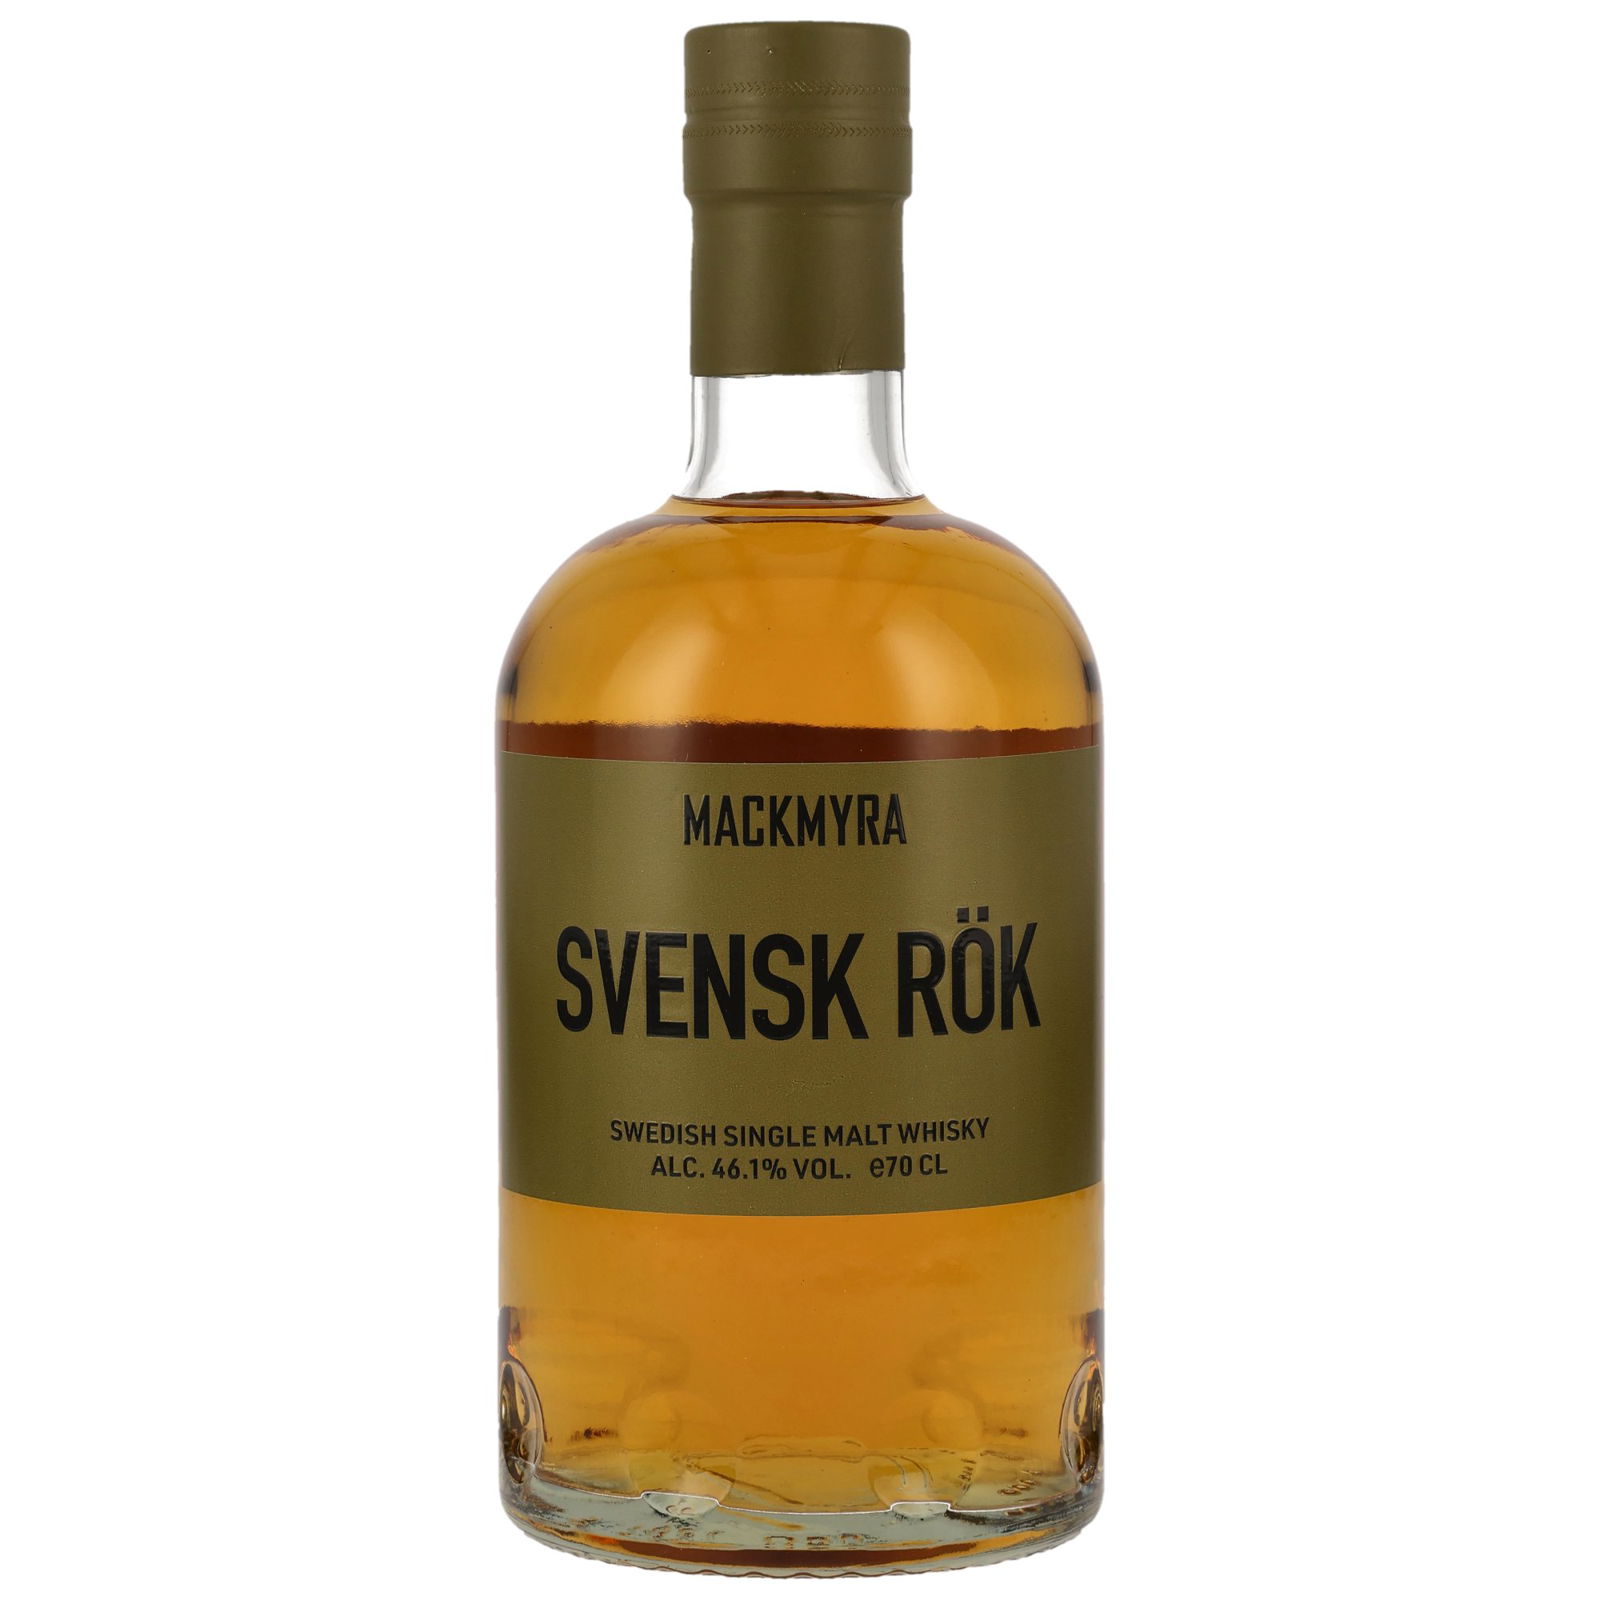 Mackmyra Svensk Rök ohne Geschenkverpackung